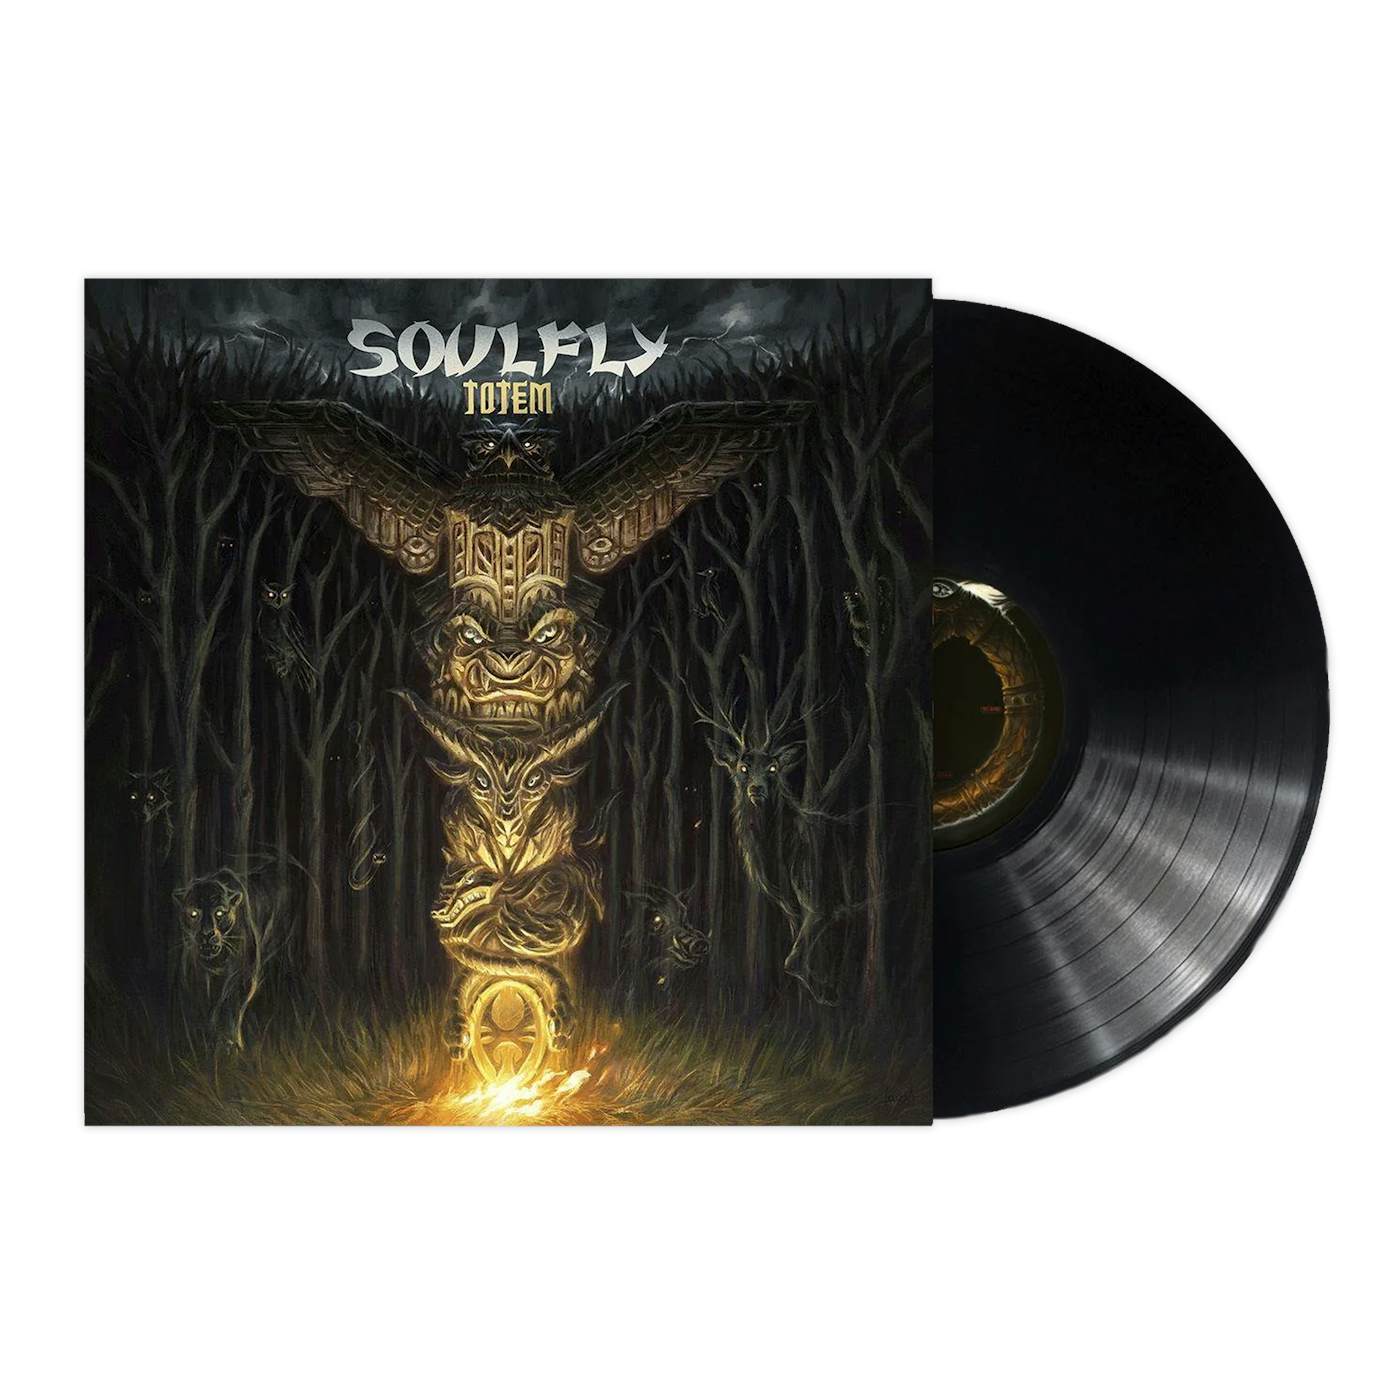 Soulfly - "Totem" LP (Vinyl)